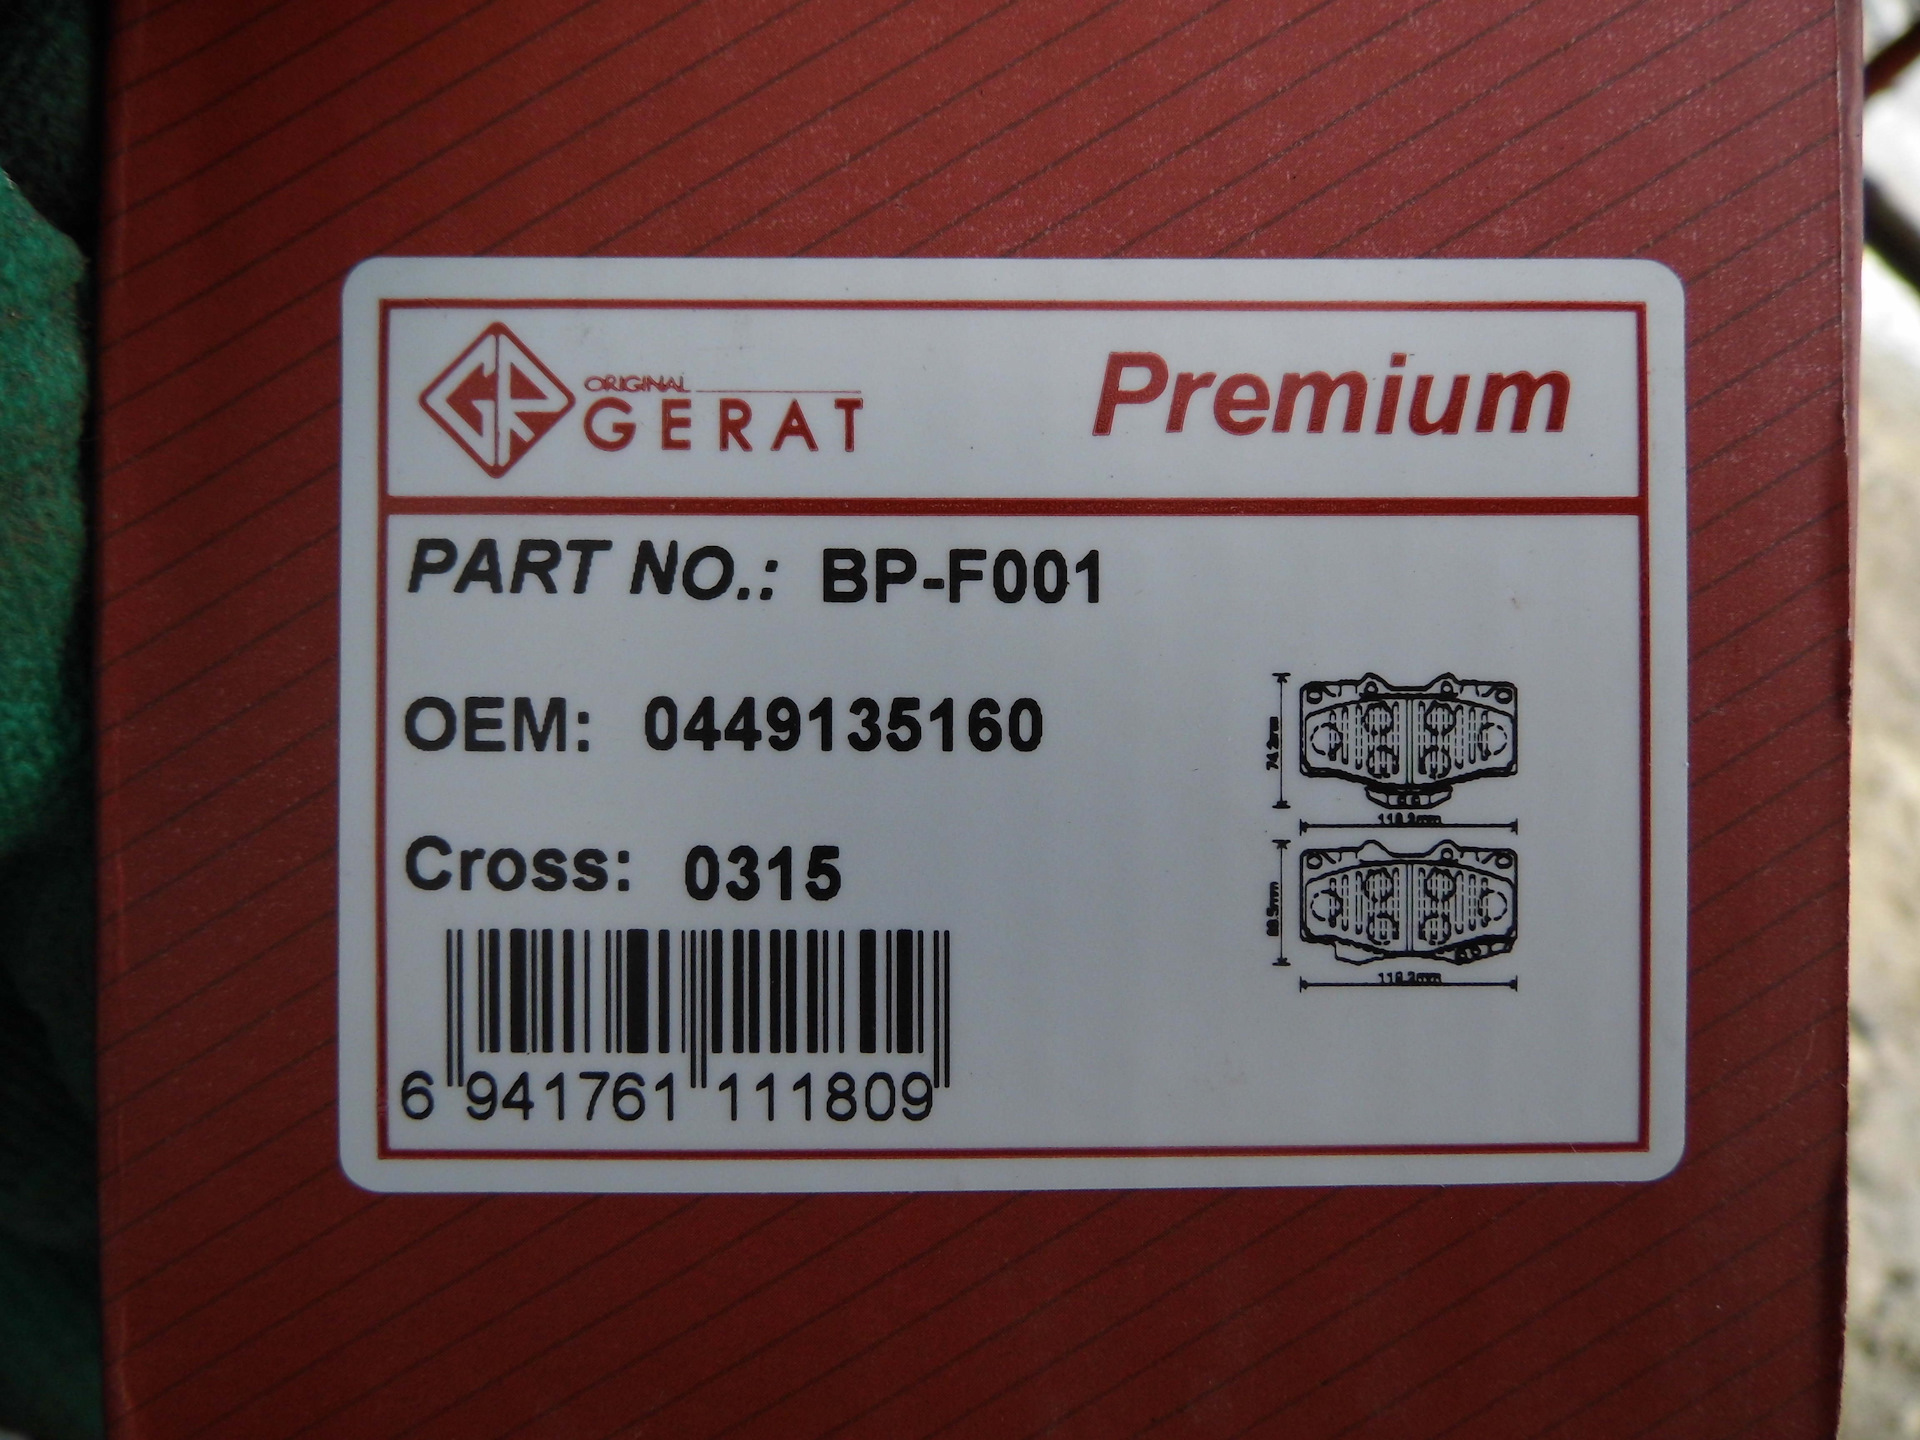 Fdparts интернет магазин. Premium Parts. Premium Parts NS-166303jy0a. Premium Parts mcmd614701. Premium Parts ABS-1403.